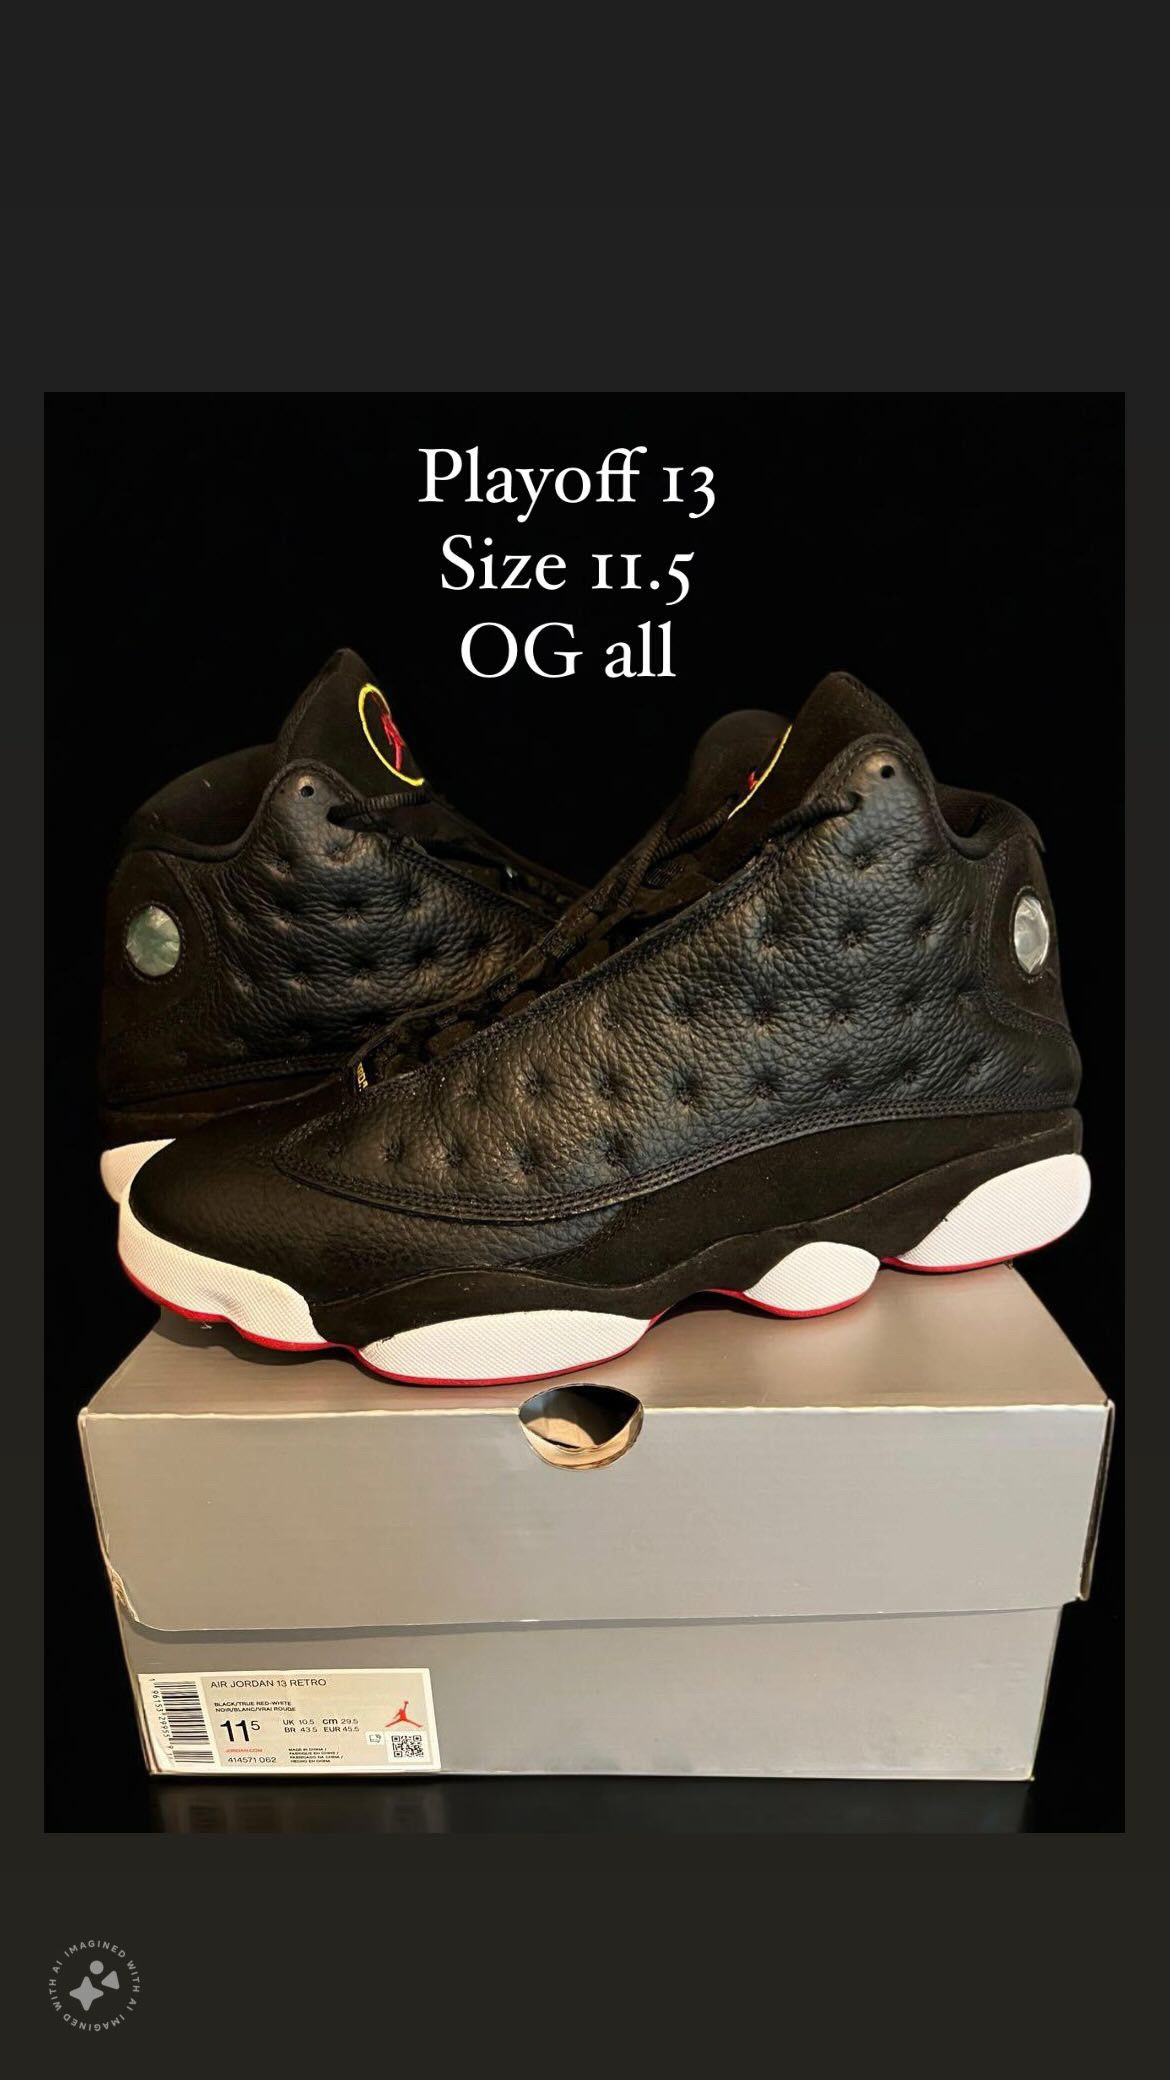 Nike Air Jordan Retro 13 Playoff Size 11.5